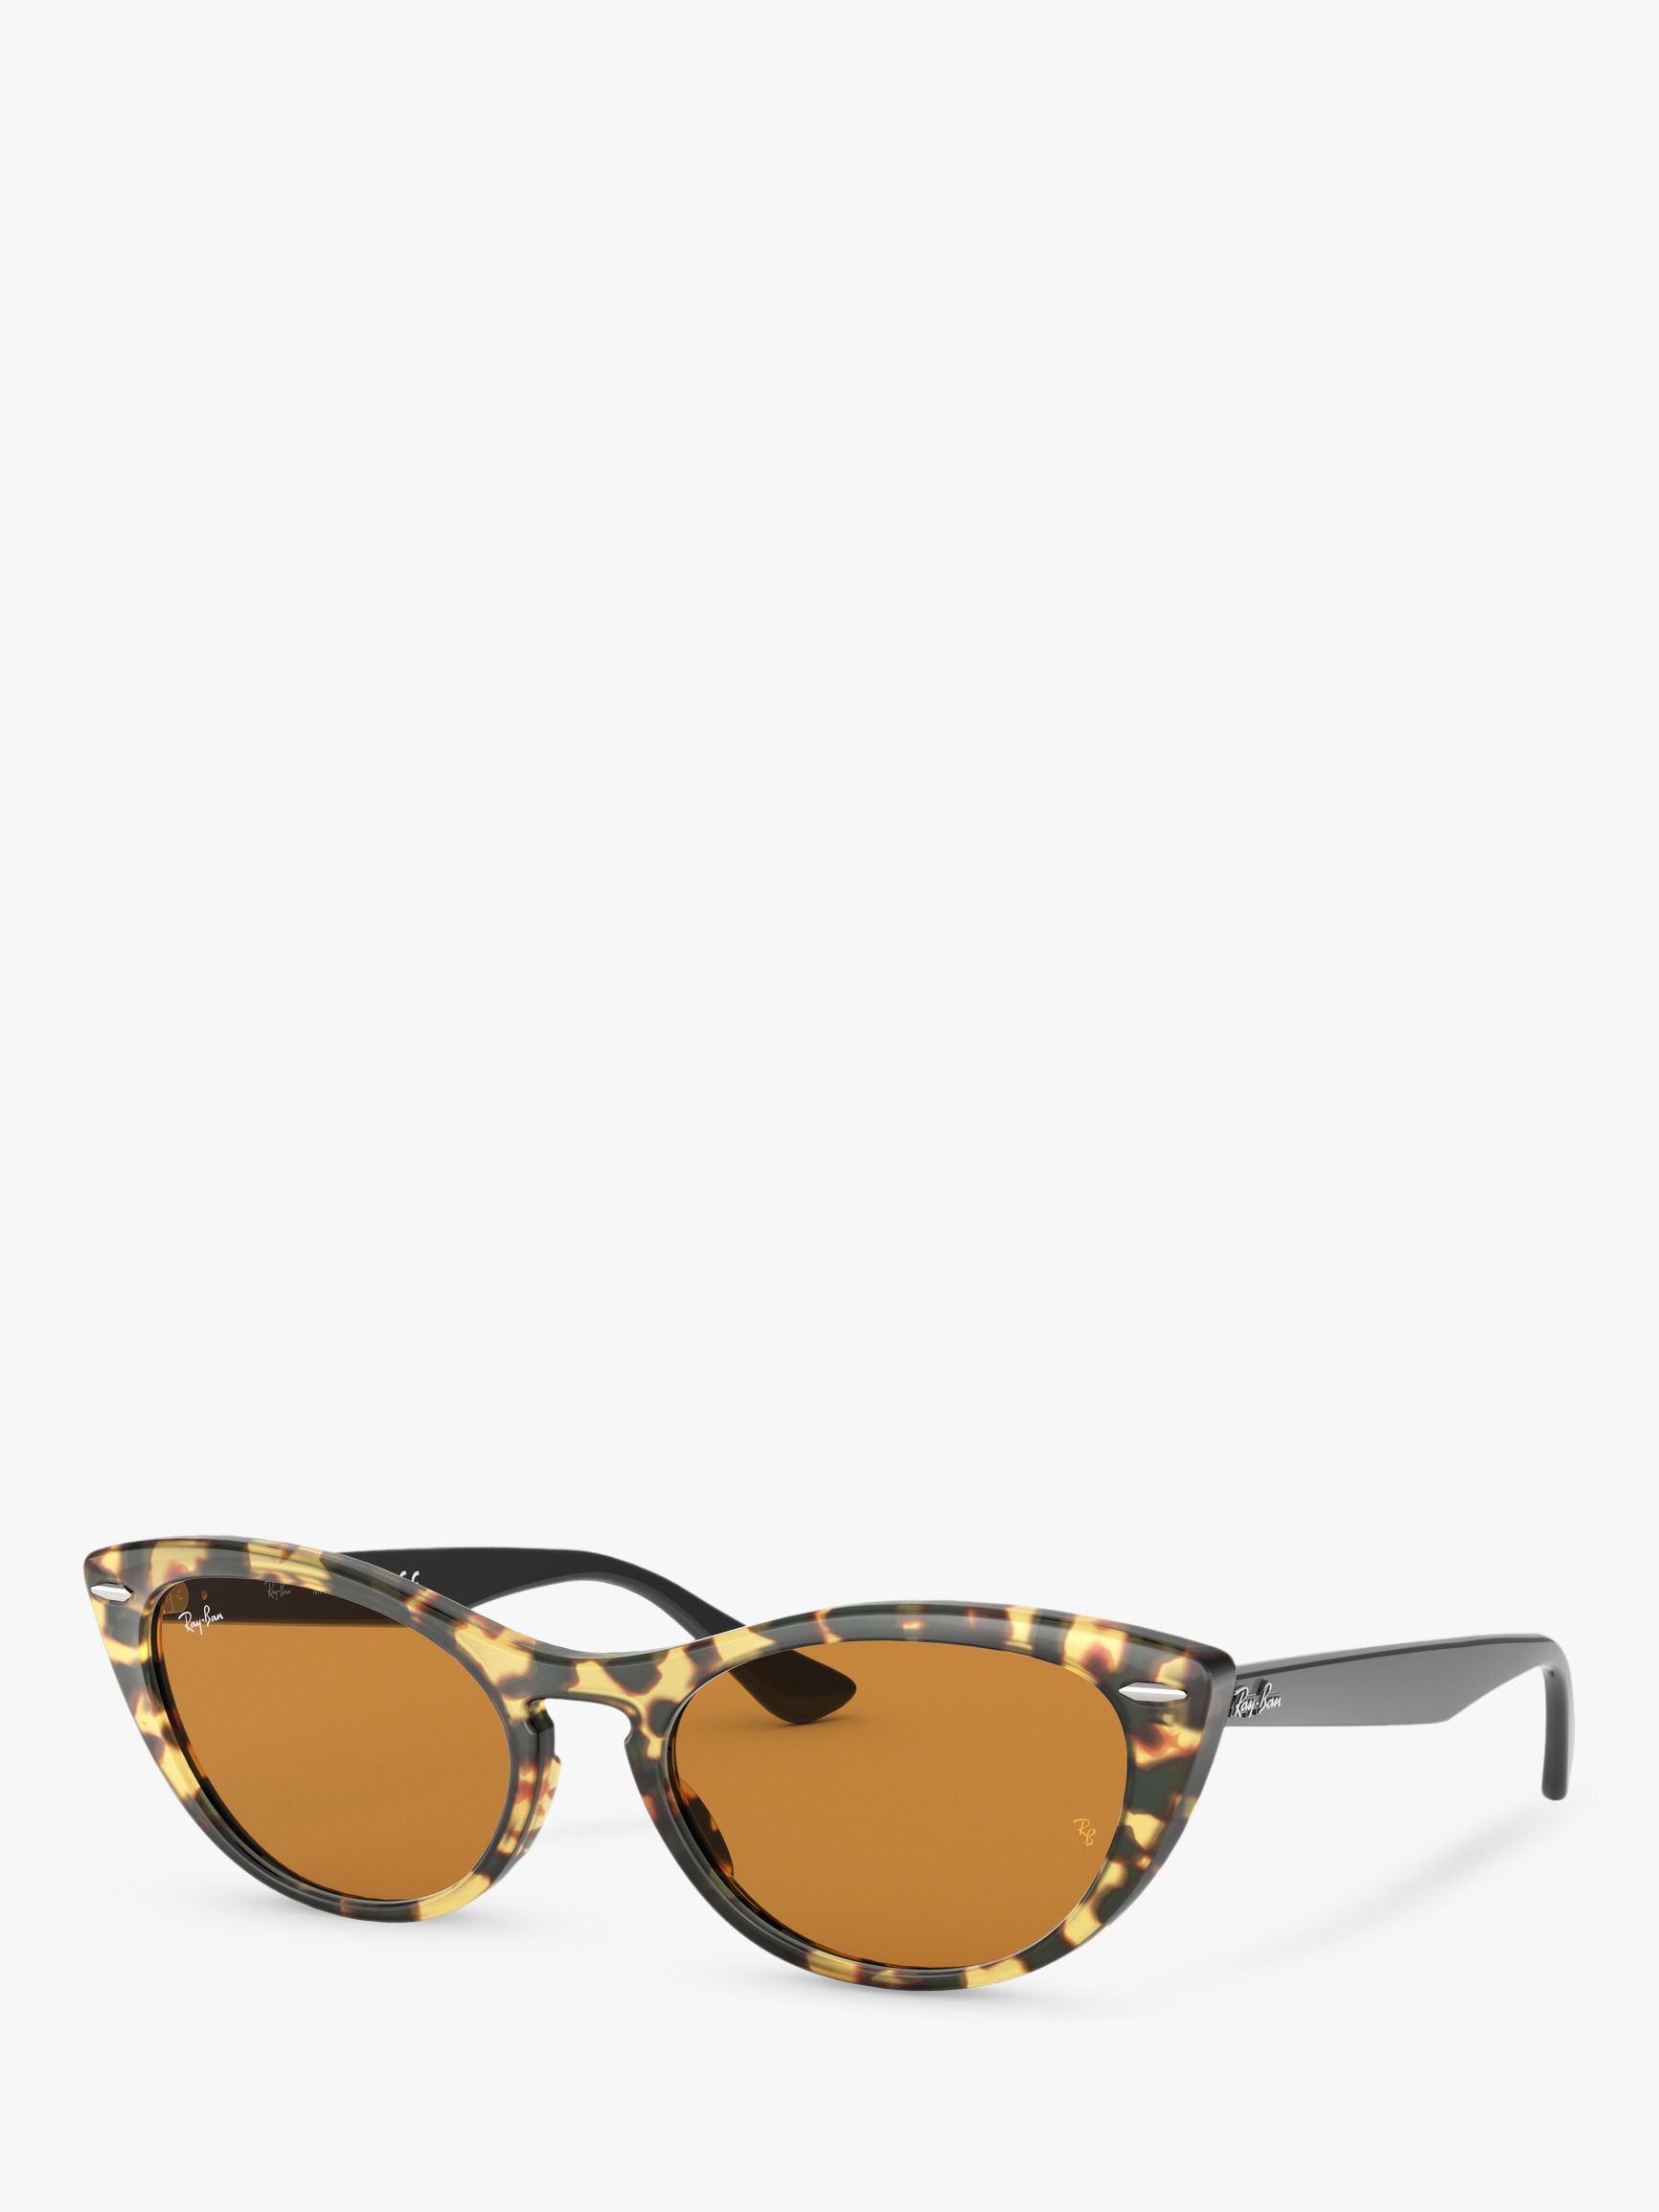 ray ban cat eye sunglasses uk